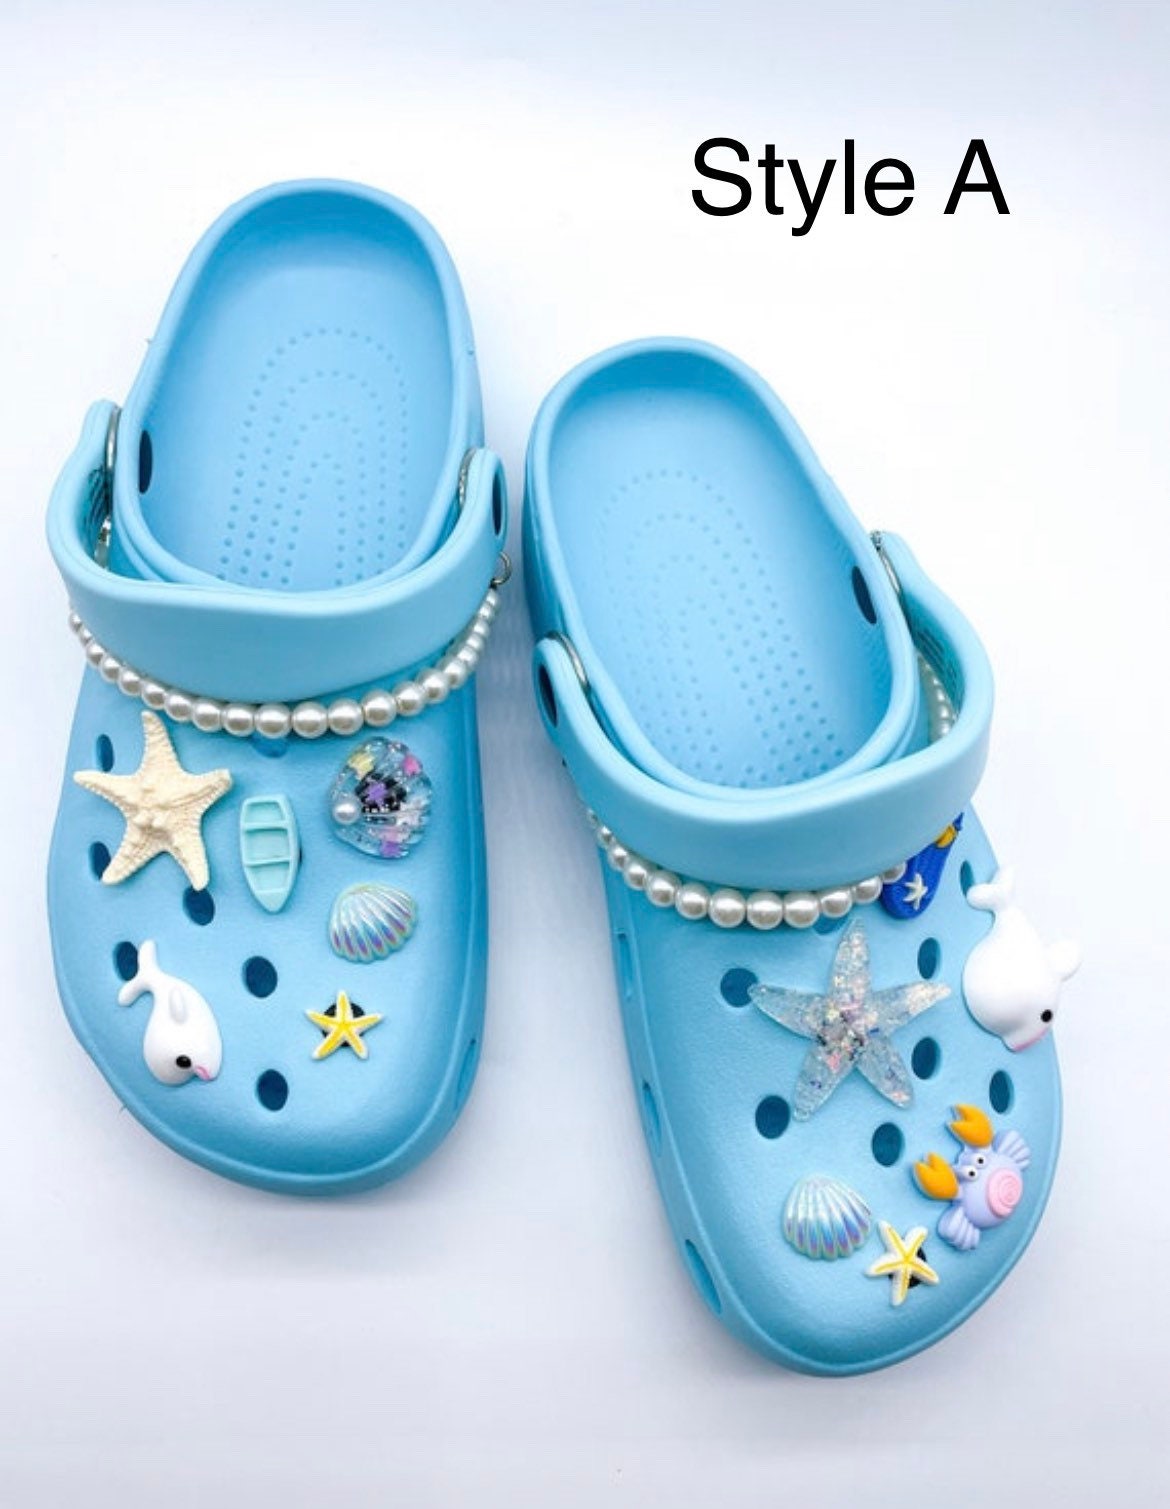 shoe charms for crocs. selena